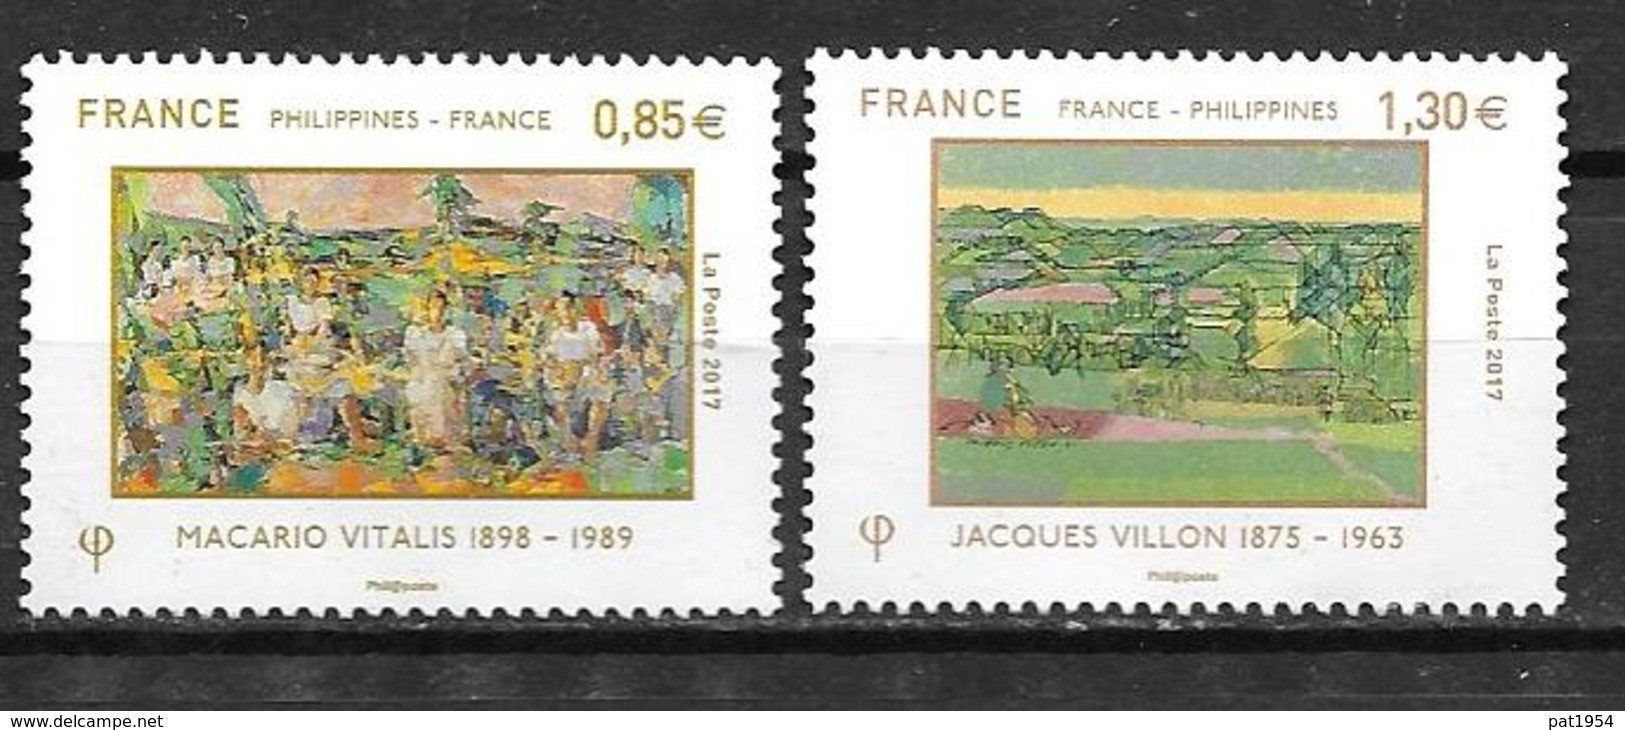 France 2017 N°5159/5160 Neufs France Philippines, à La Faciale + 15% - Unused Stamps